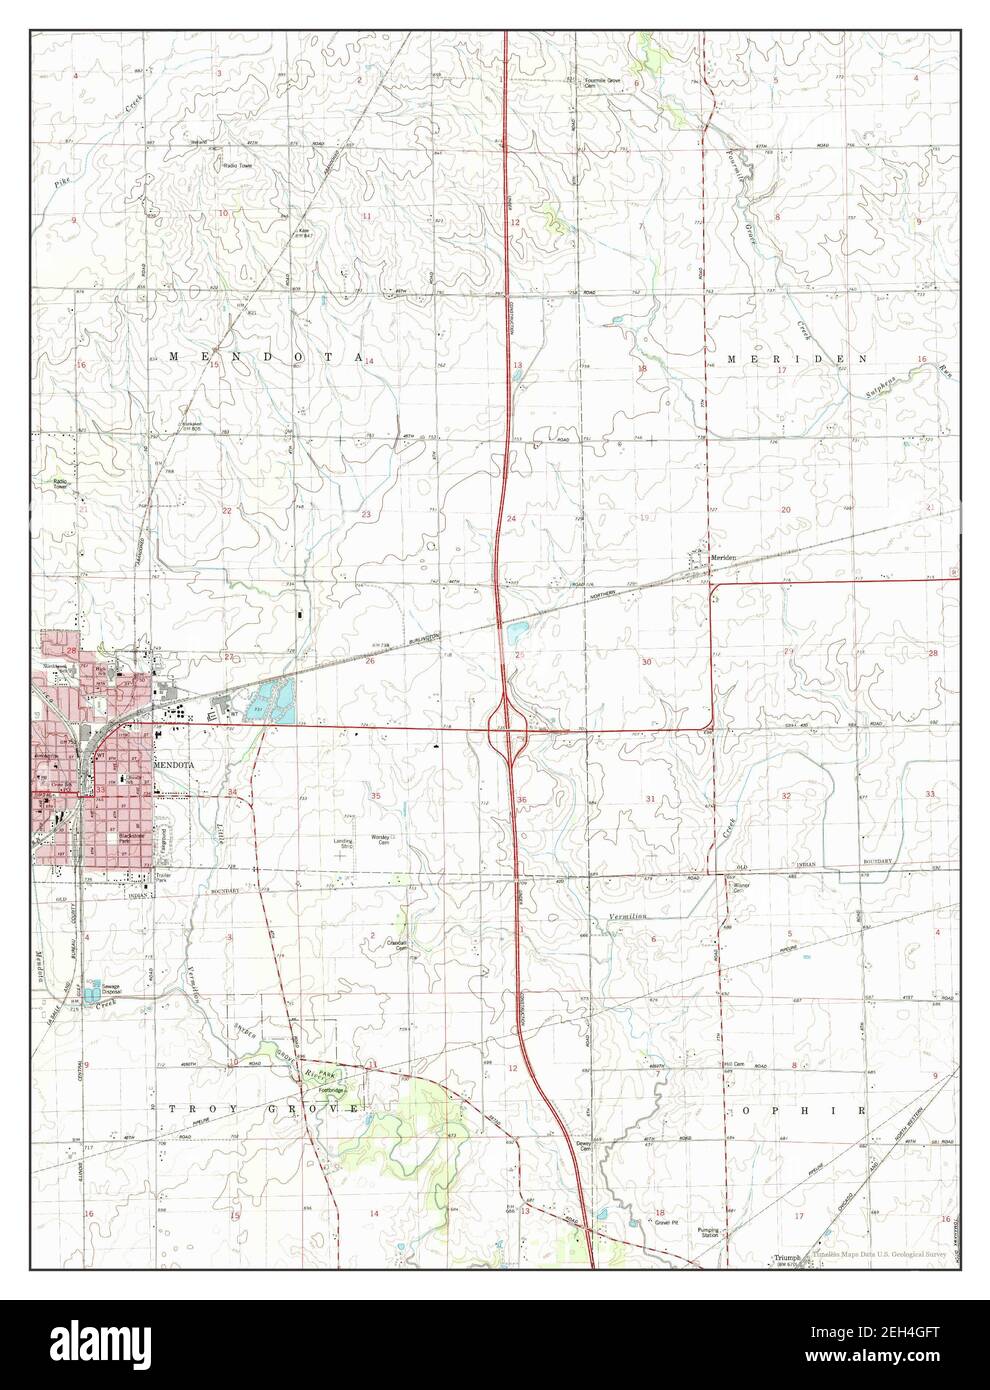 Mendota East, Illinois, map 1982, 1:24000, United States of America by Timeless Maps, data U.S. Geological Survey Stock Photo